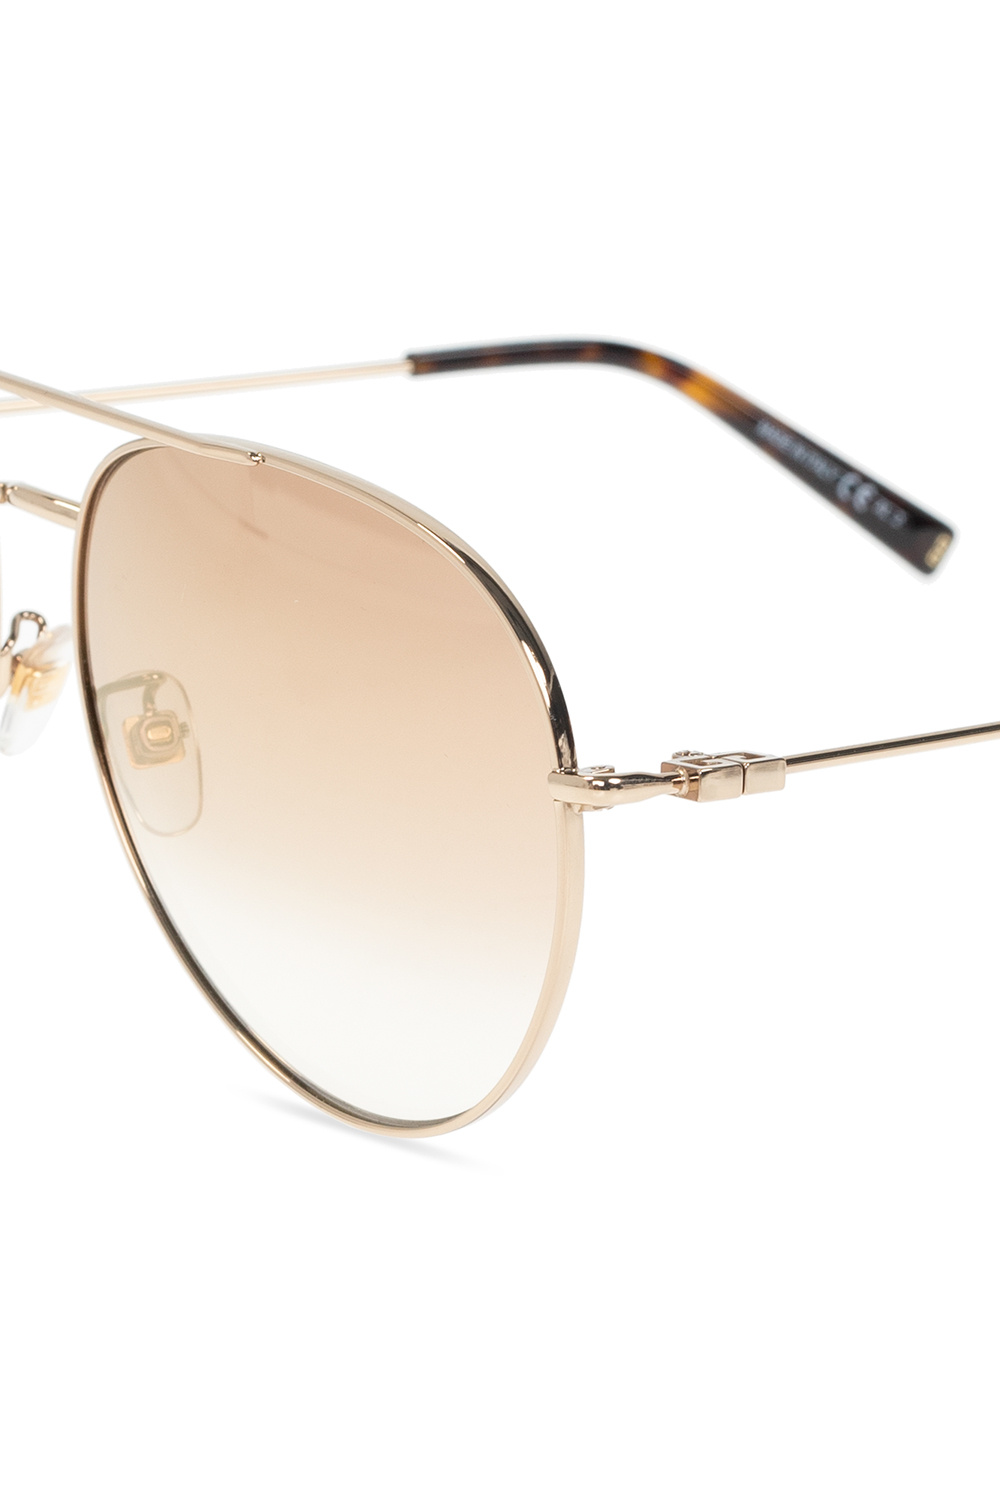 Givenchy Oliver Peoples Emet side sunglasses